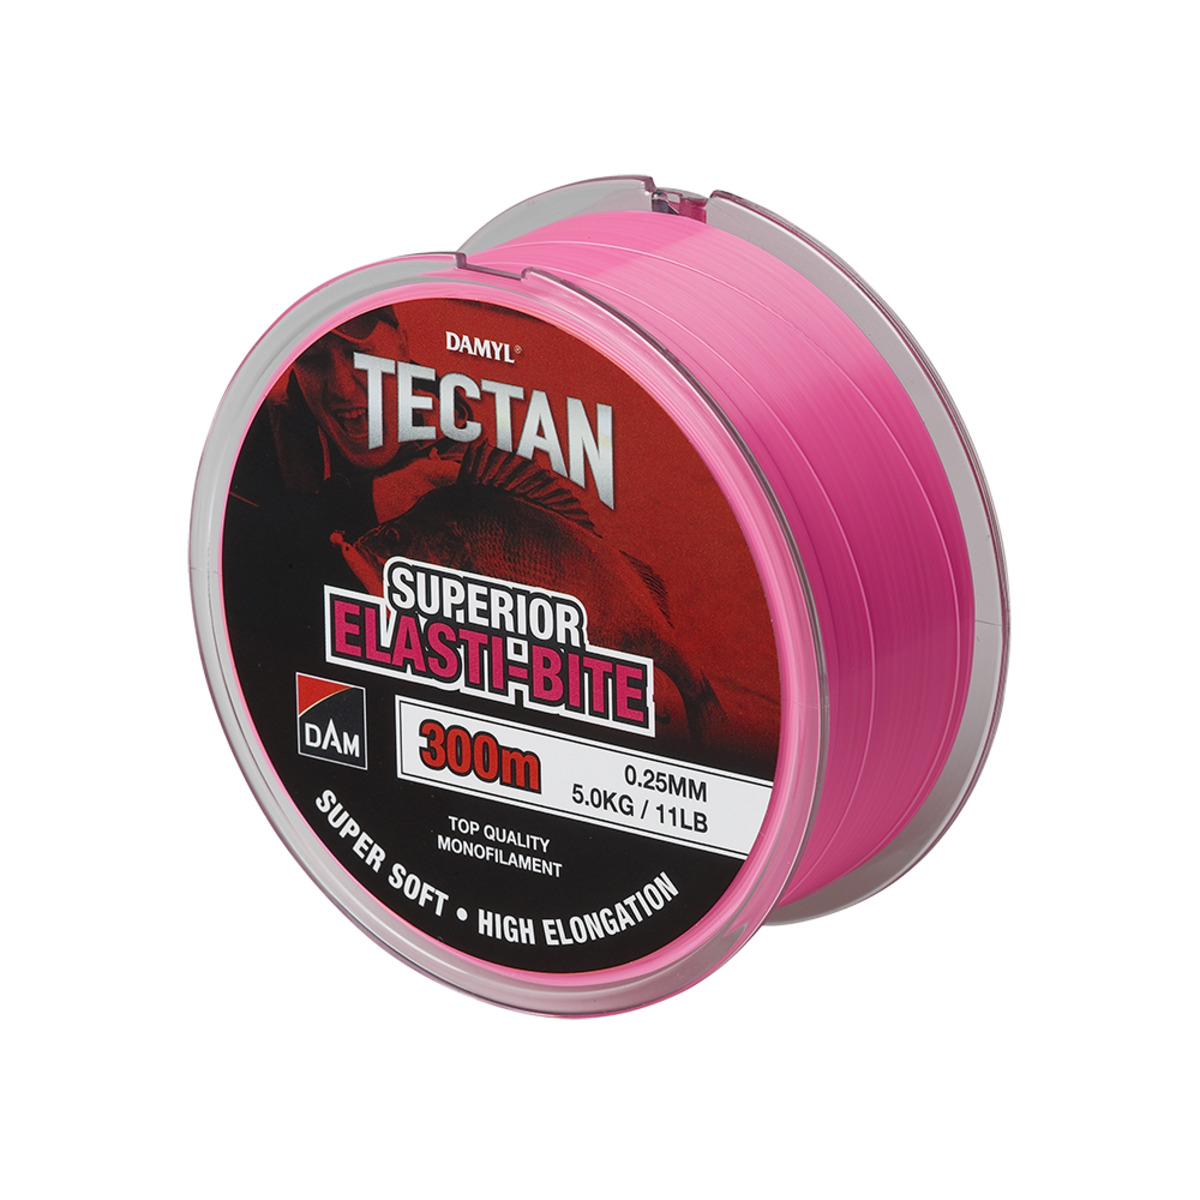 Dam Tectan Superior Elasti-bite 300m - 0.40MM 10.5KG 23LBS PINK